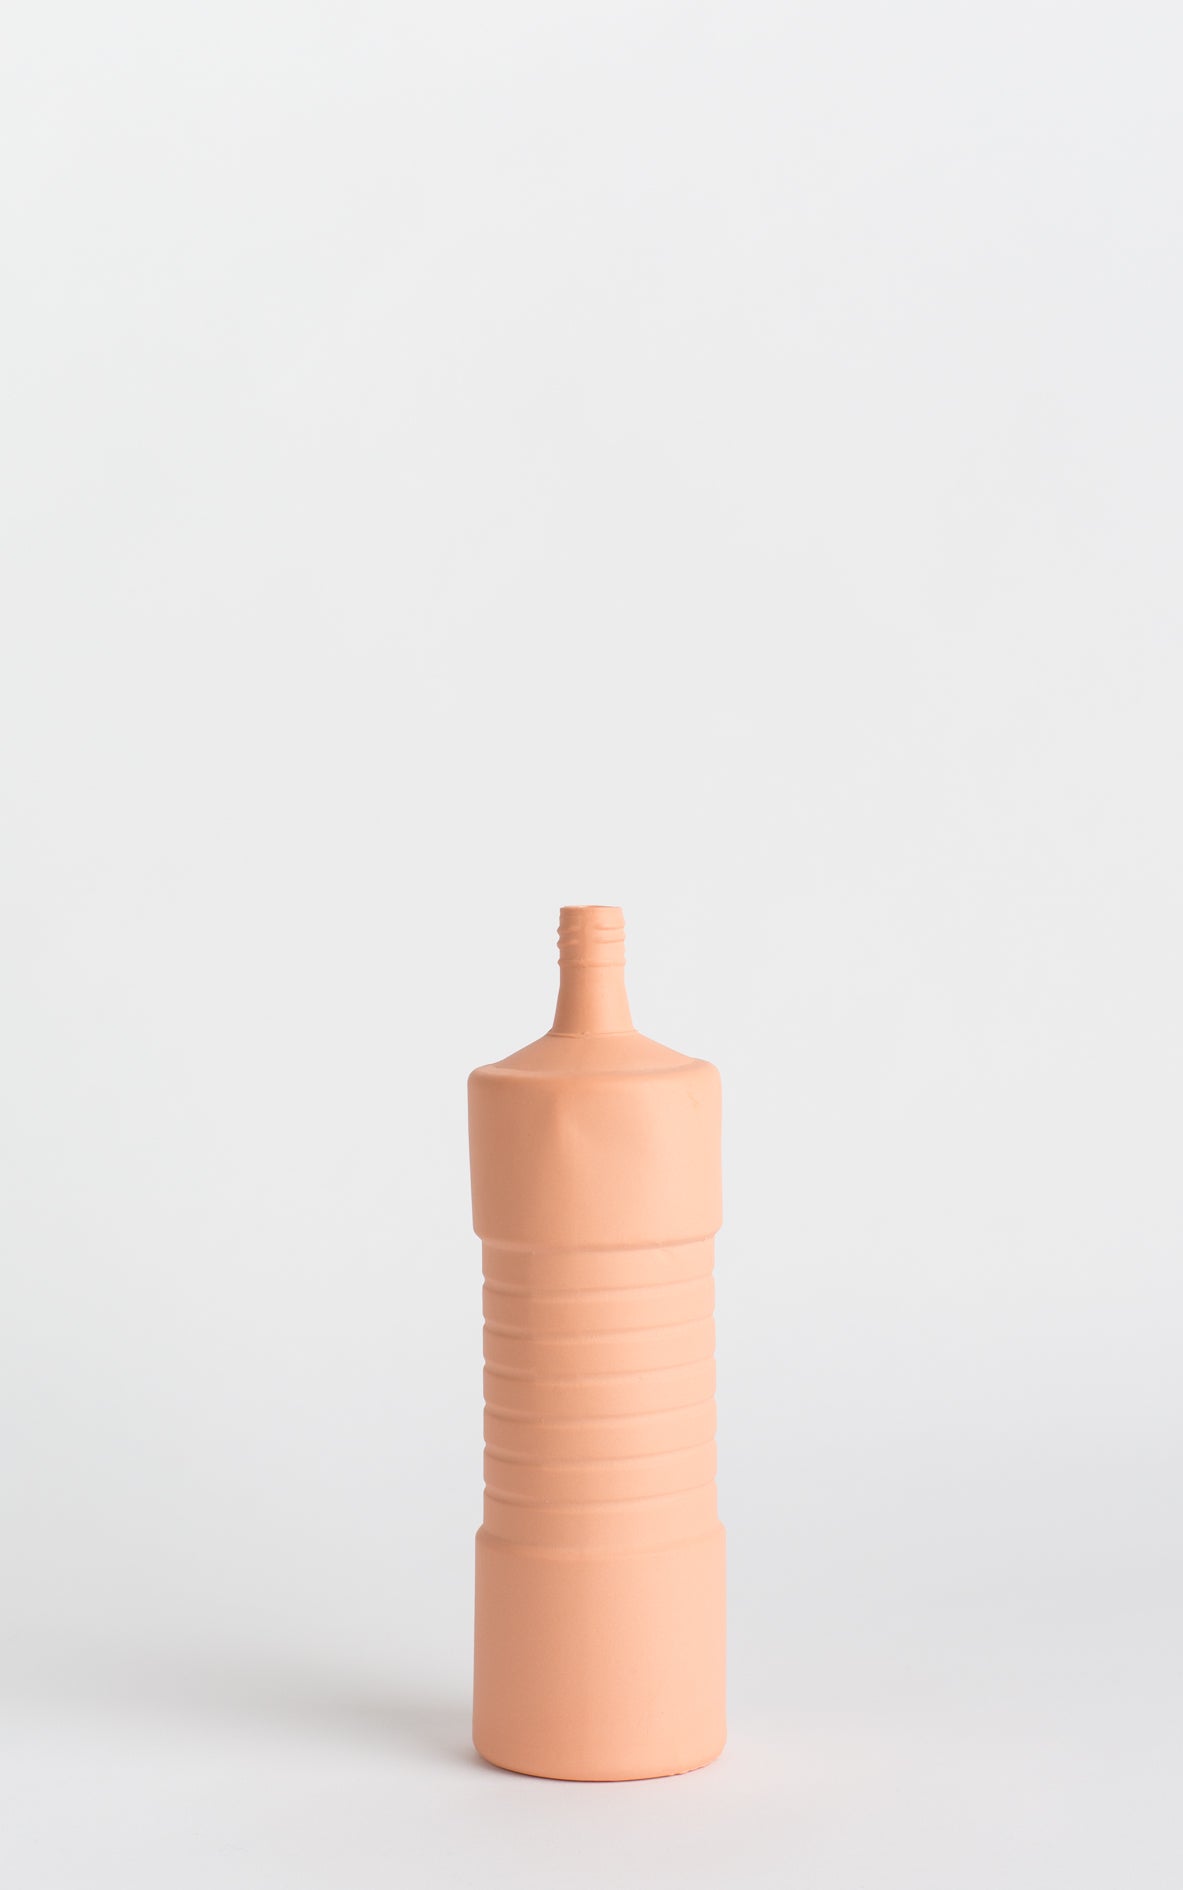 Foekje Fleur - Bottle vase #5 orange